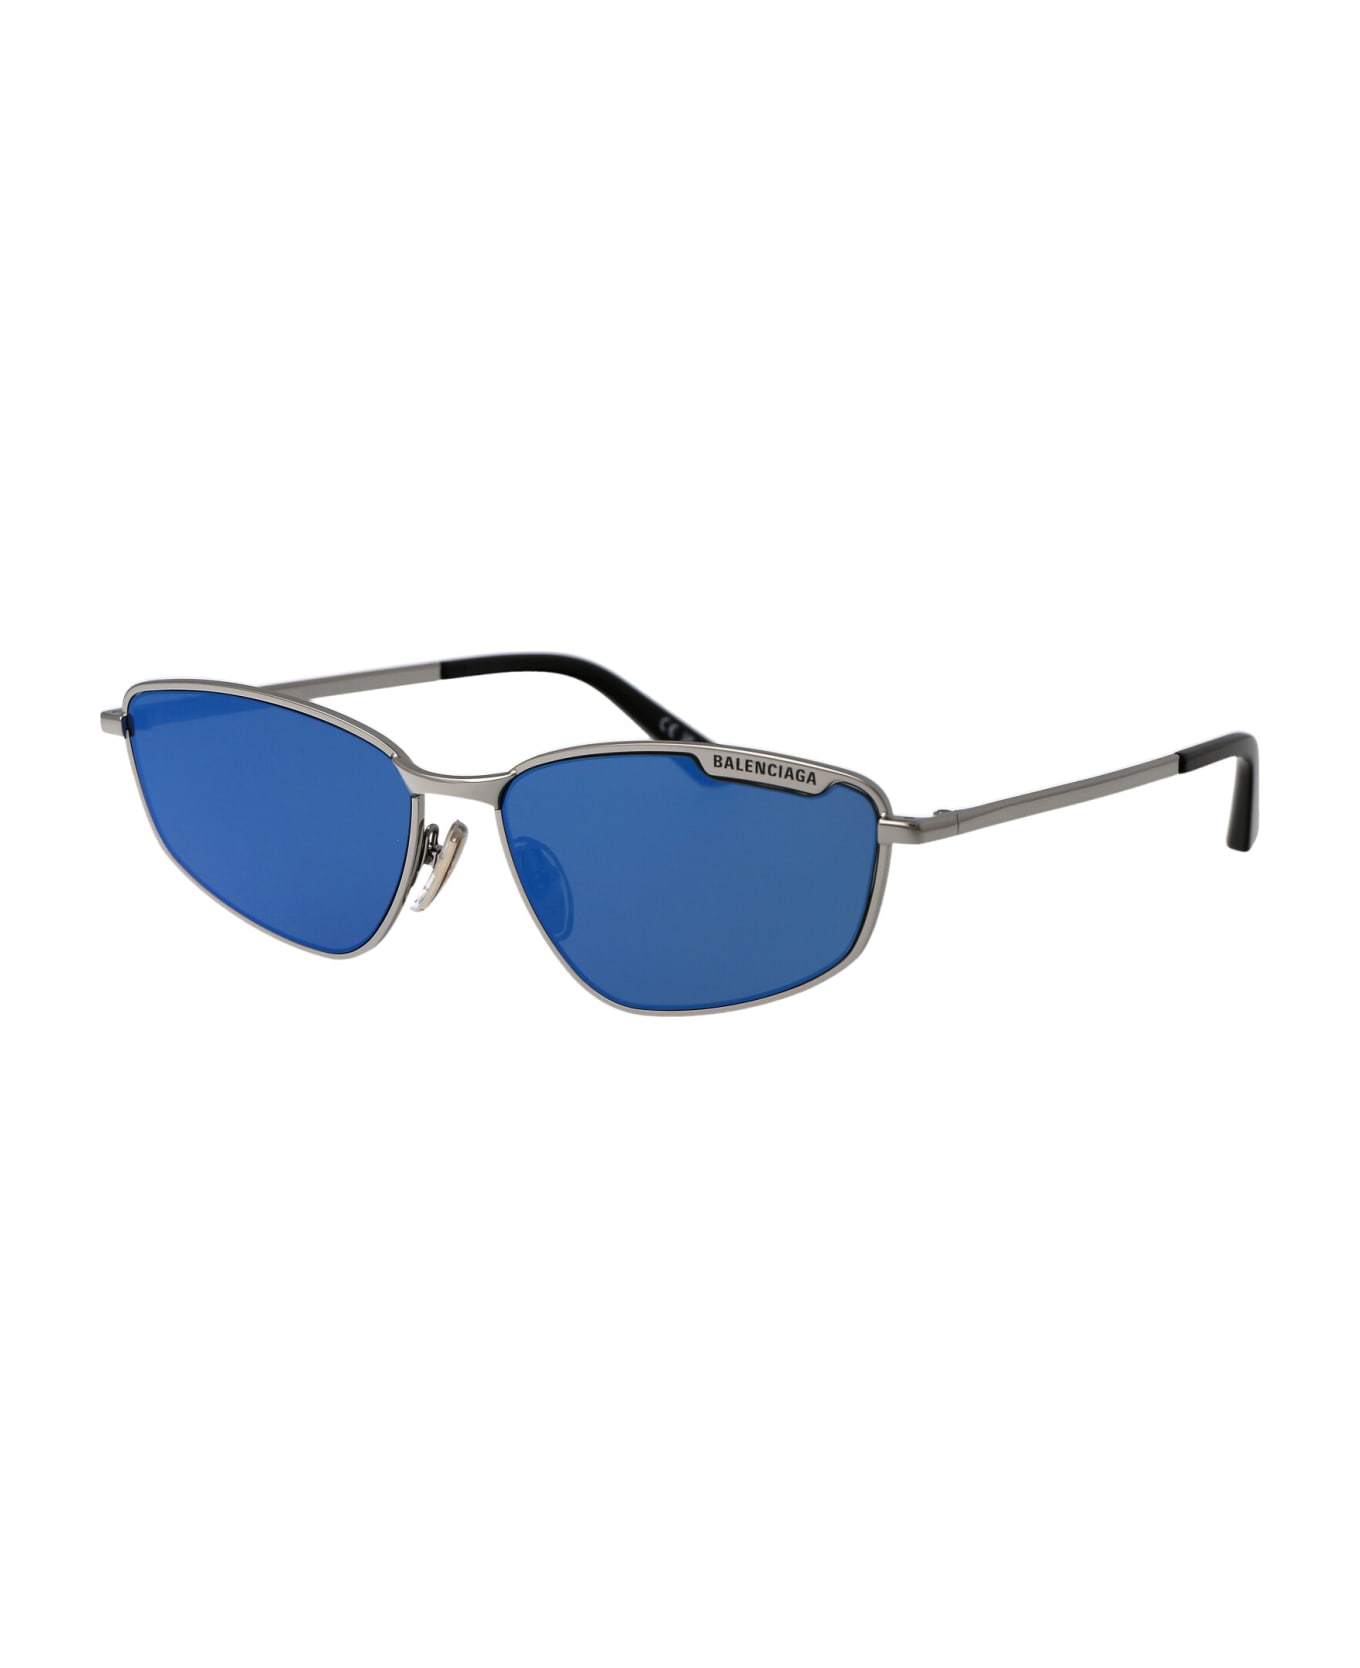 Balenciaga Eyewear Metal Constructed Signature Logo Sunglasses - 003 RUTHENIUM RUTHENIUM BLUE